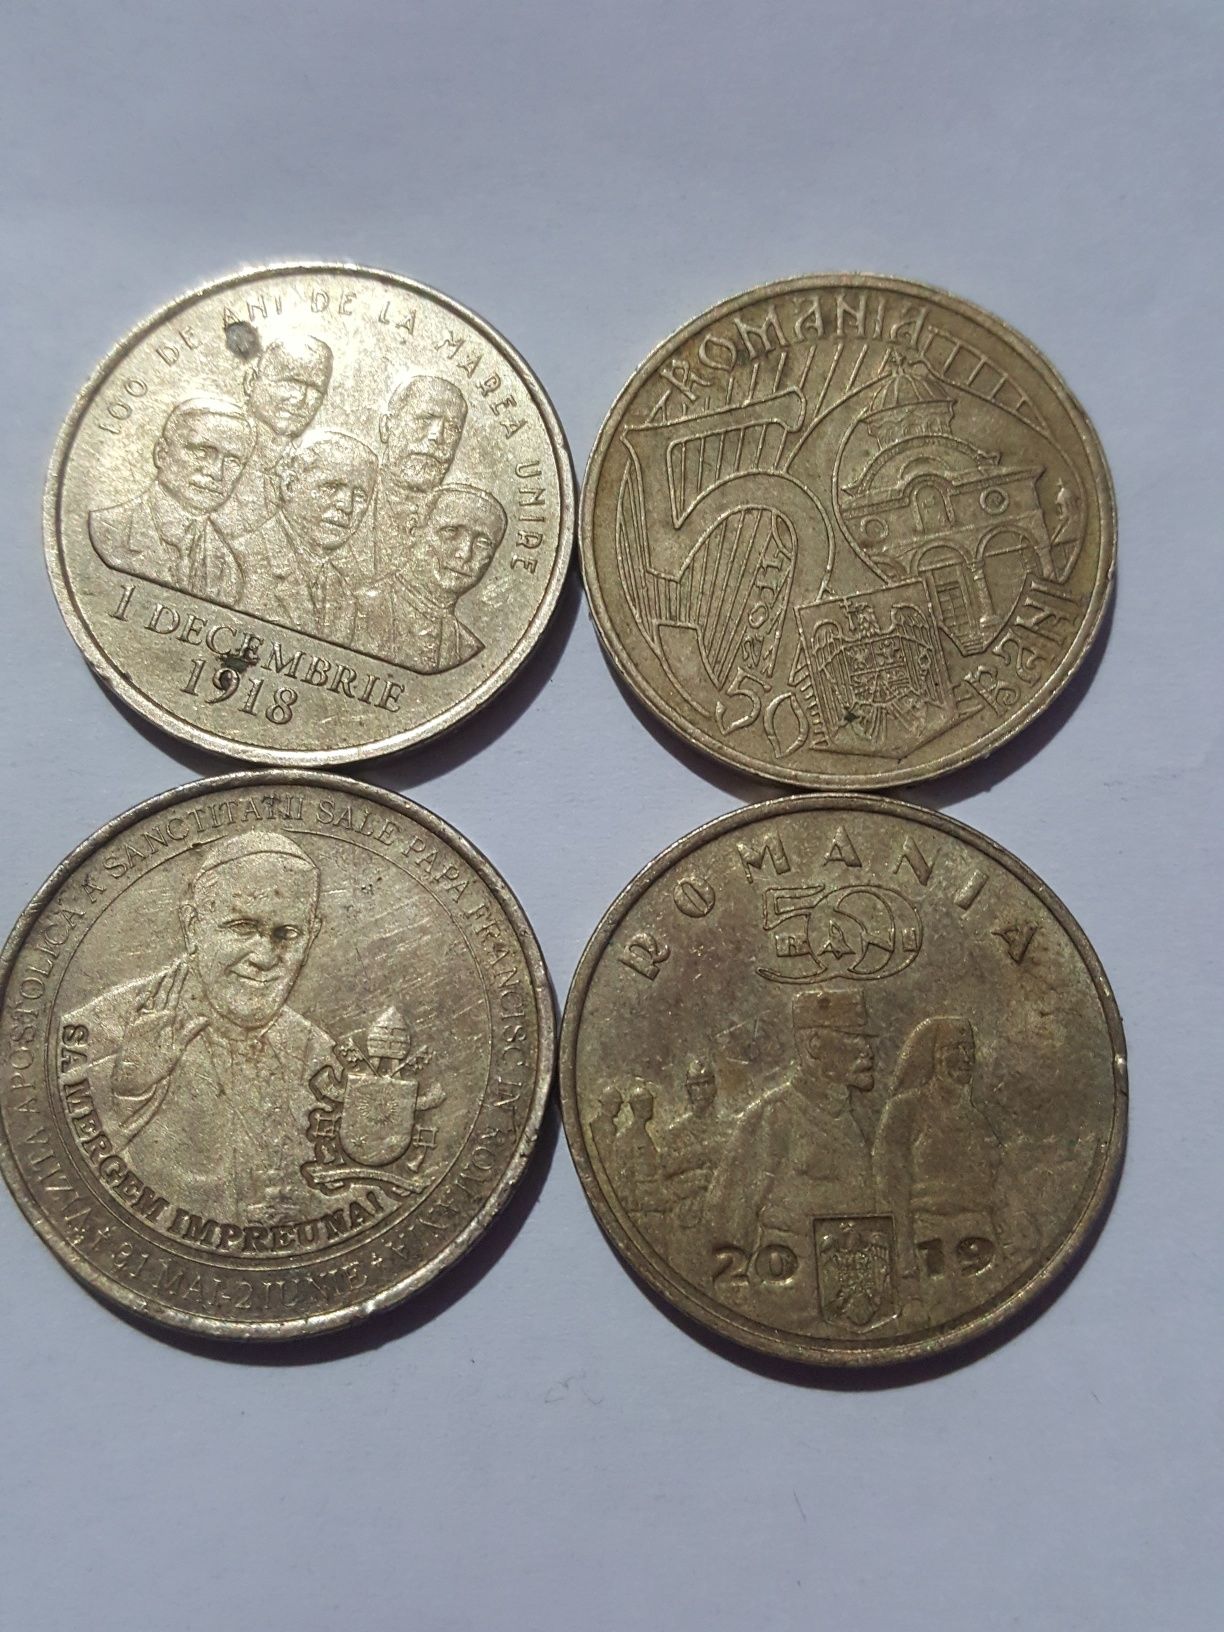 Monede romnesti de colectie